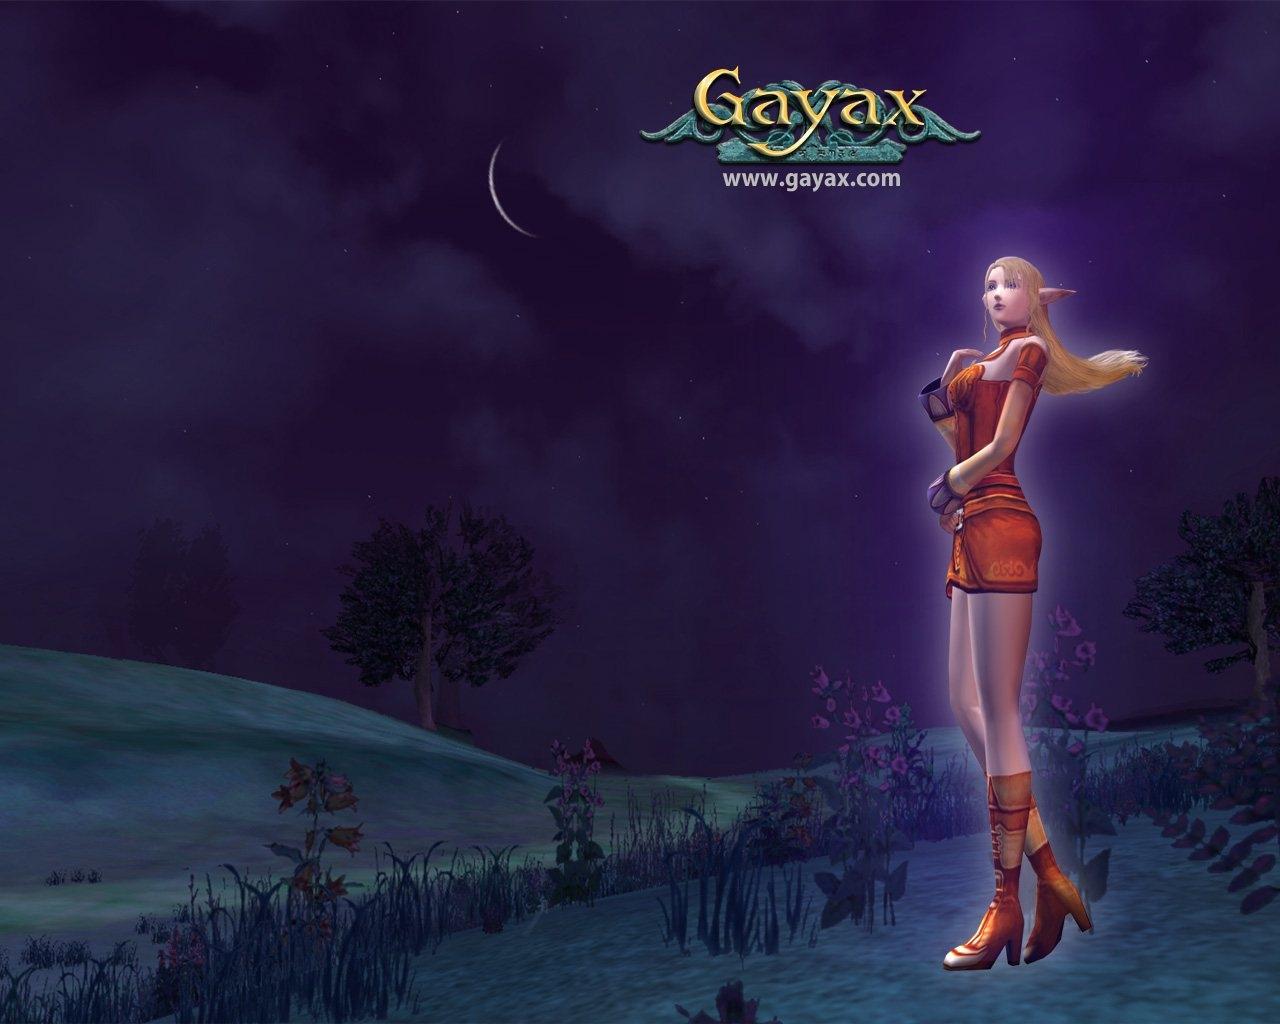 Gayax at 1024 x 768 size wallpapers HD quality